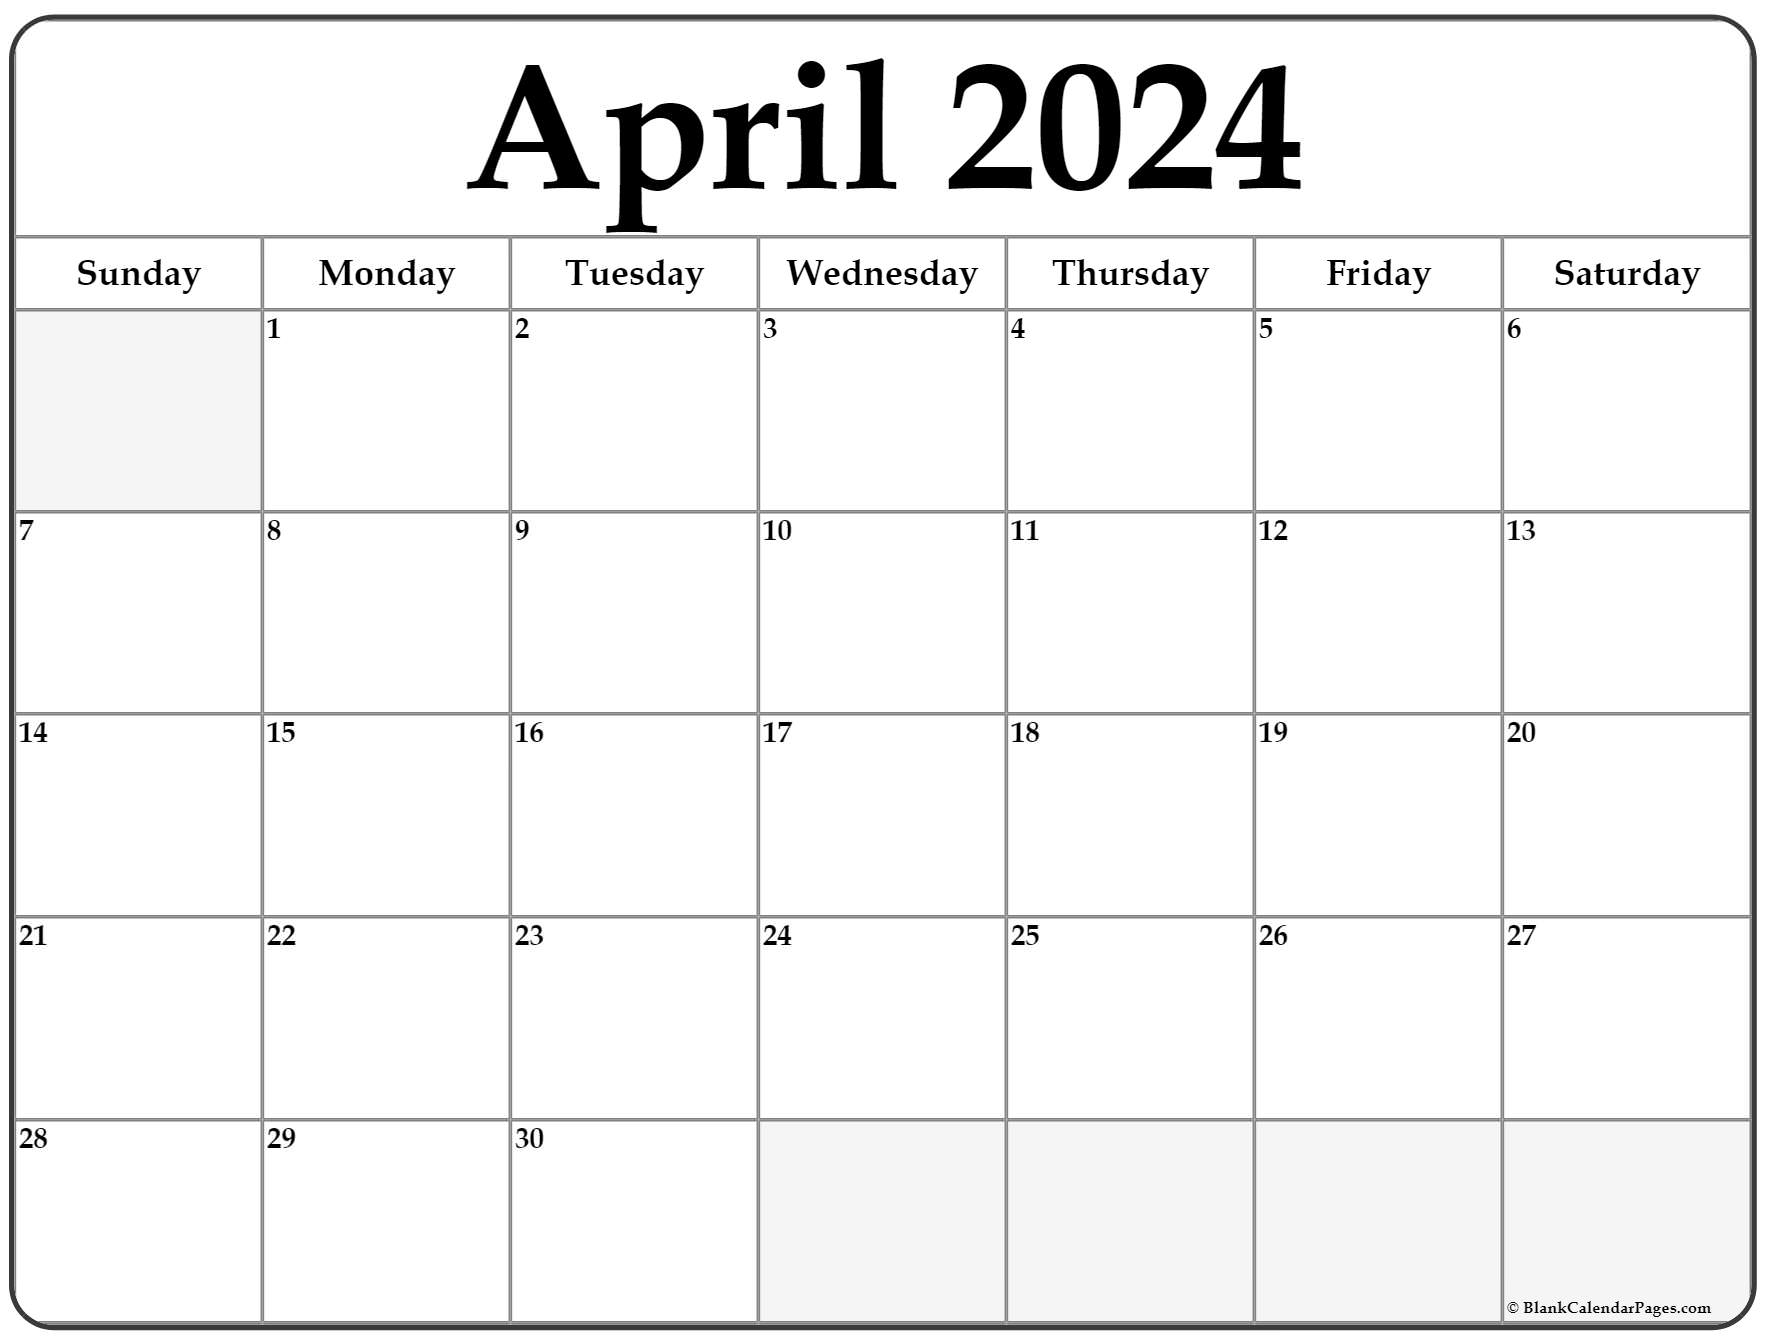 April 2024 Calendar | Free Printable Calendar pertaining to Blank April Calendar 2024